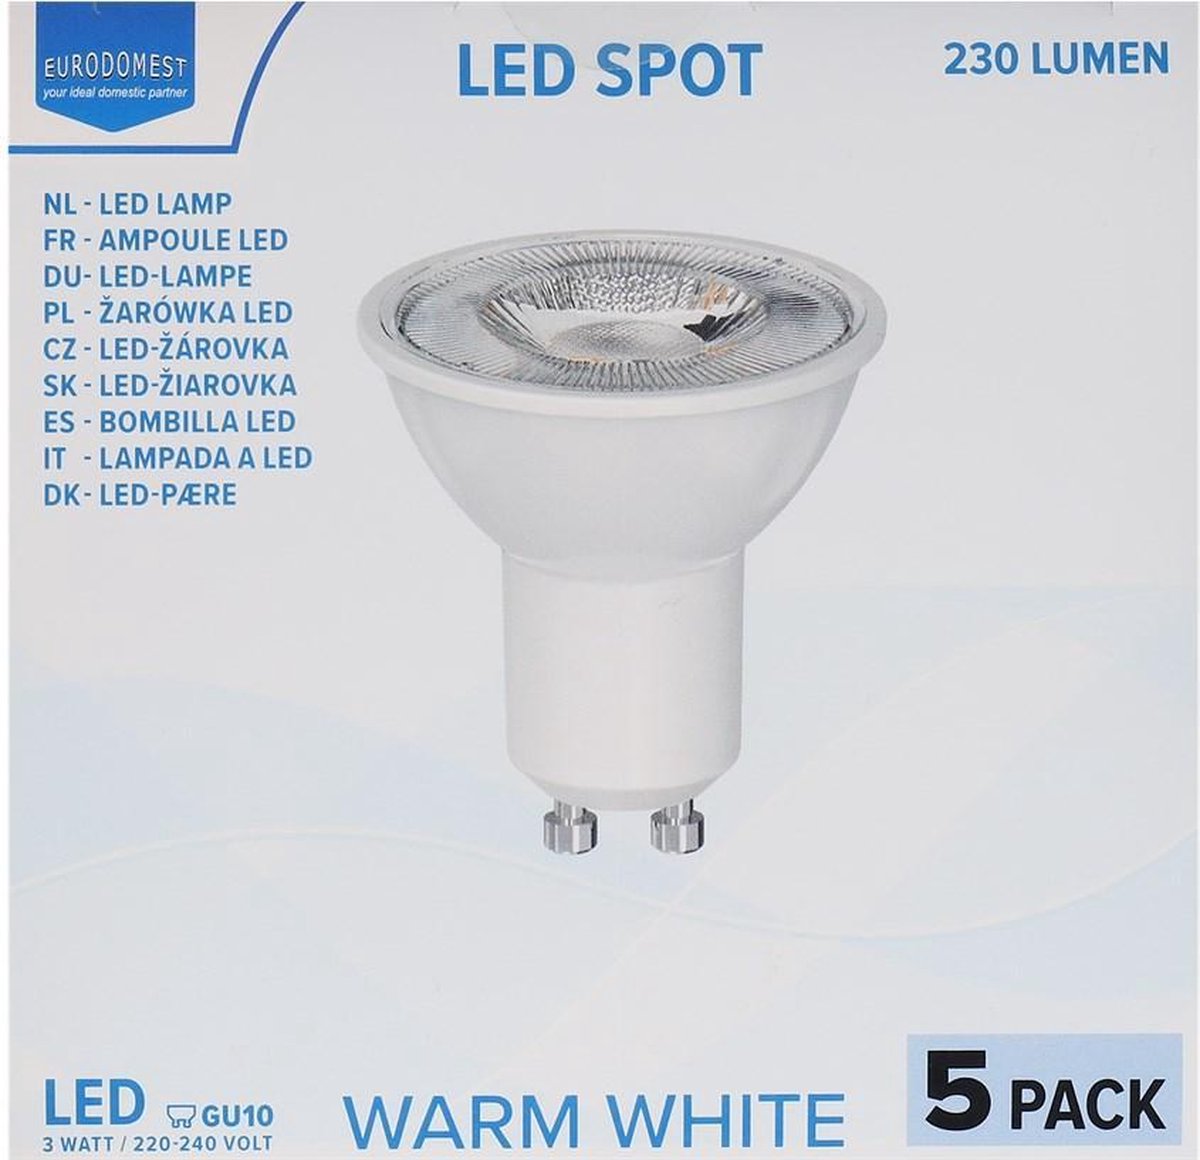 LED spotjes | 5 stuks | Warm wit licht | 3 watt | GU10| Eurodomest | bol.com